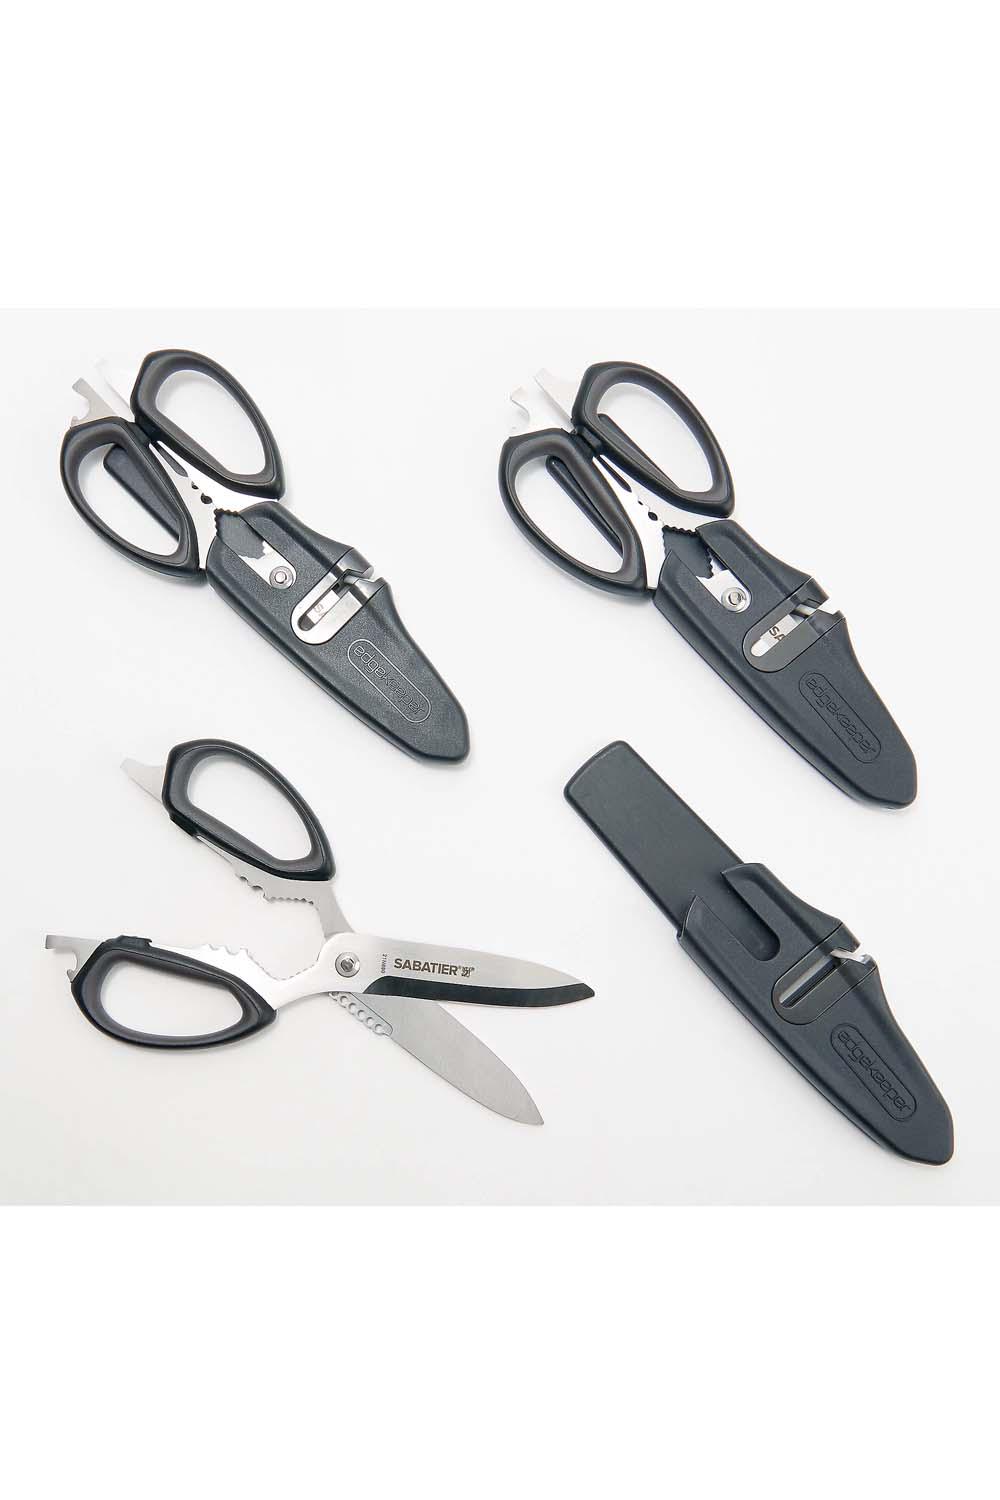 Sabatier 2-in-1 All-Purpose Scissors, Gift Wrap Scissors with Removable  Tape Dispenser Blade Cover, Ultra-Sharp Stainless Steel Multi-Purpose  Scissors